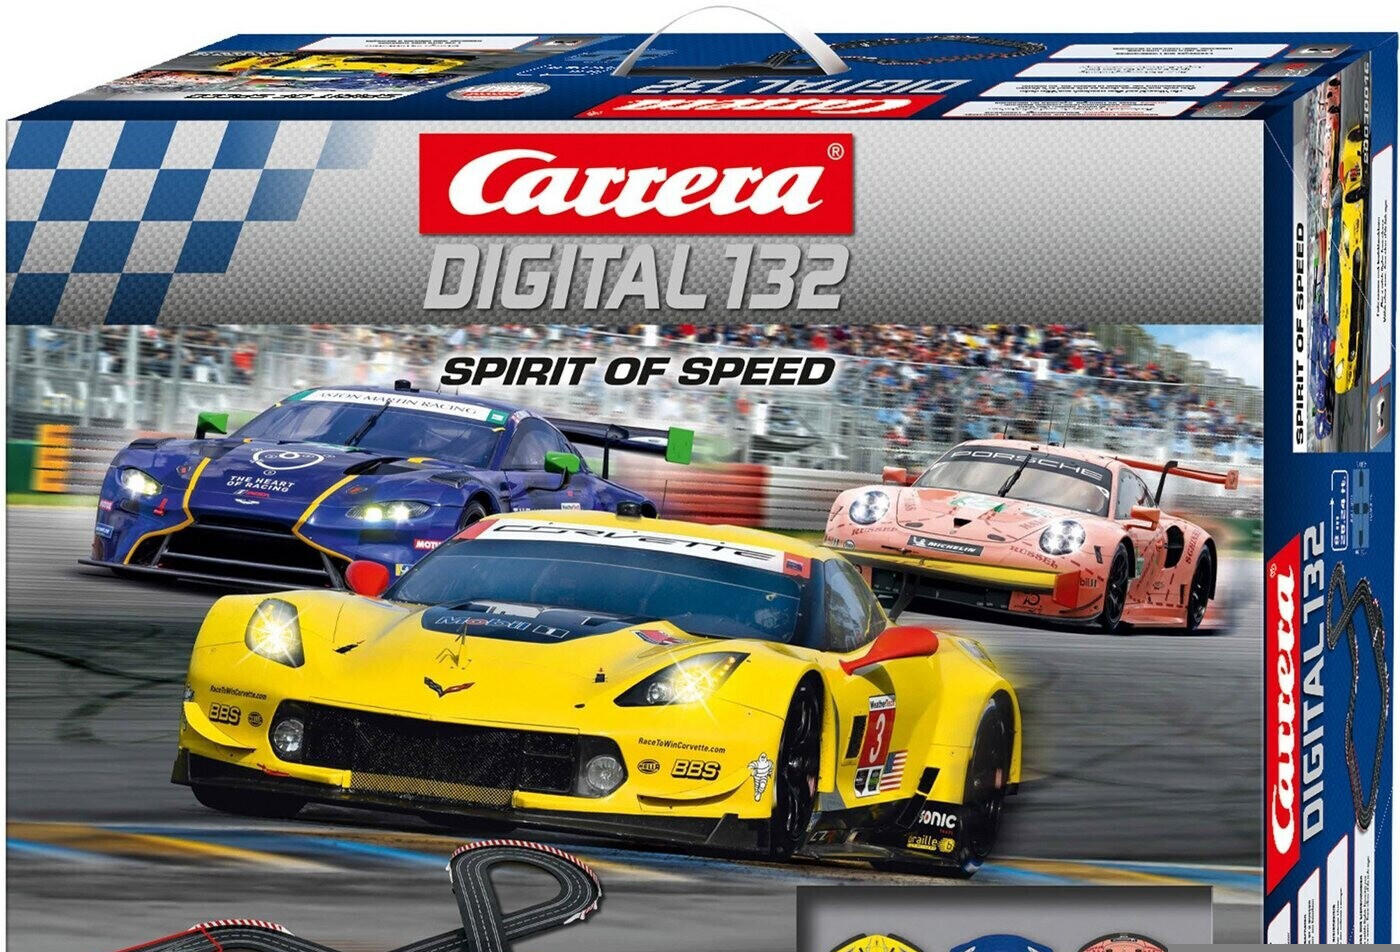 Circuit Carrera Digital 132 Spirit of Speed